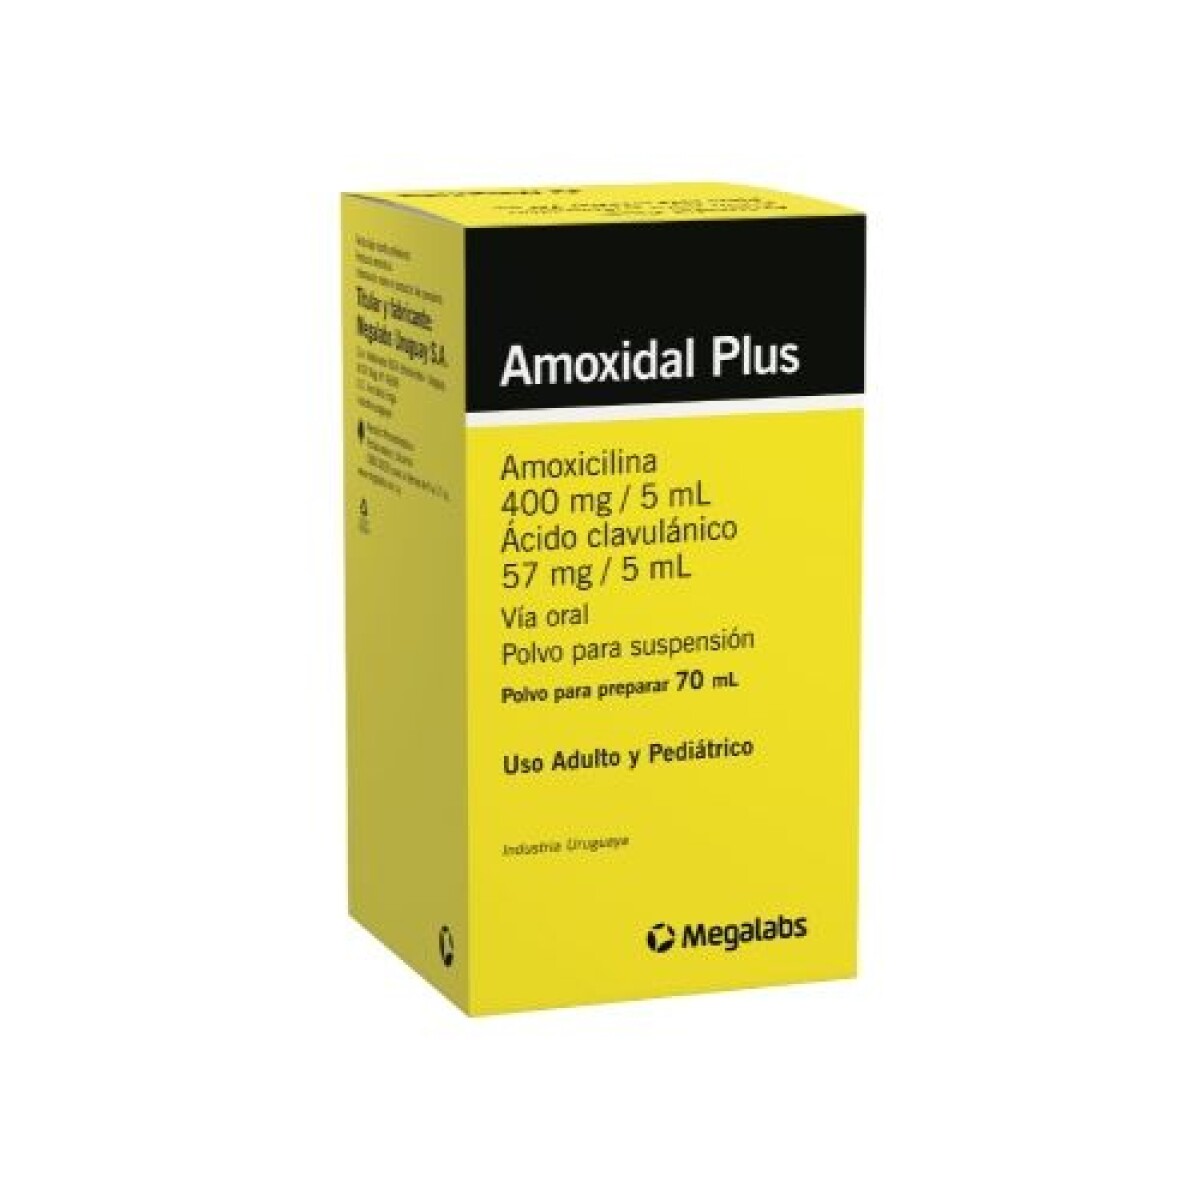 Amoxidal Plus 70ml 